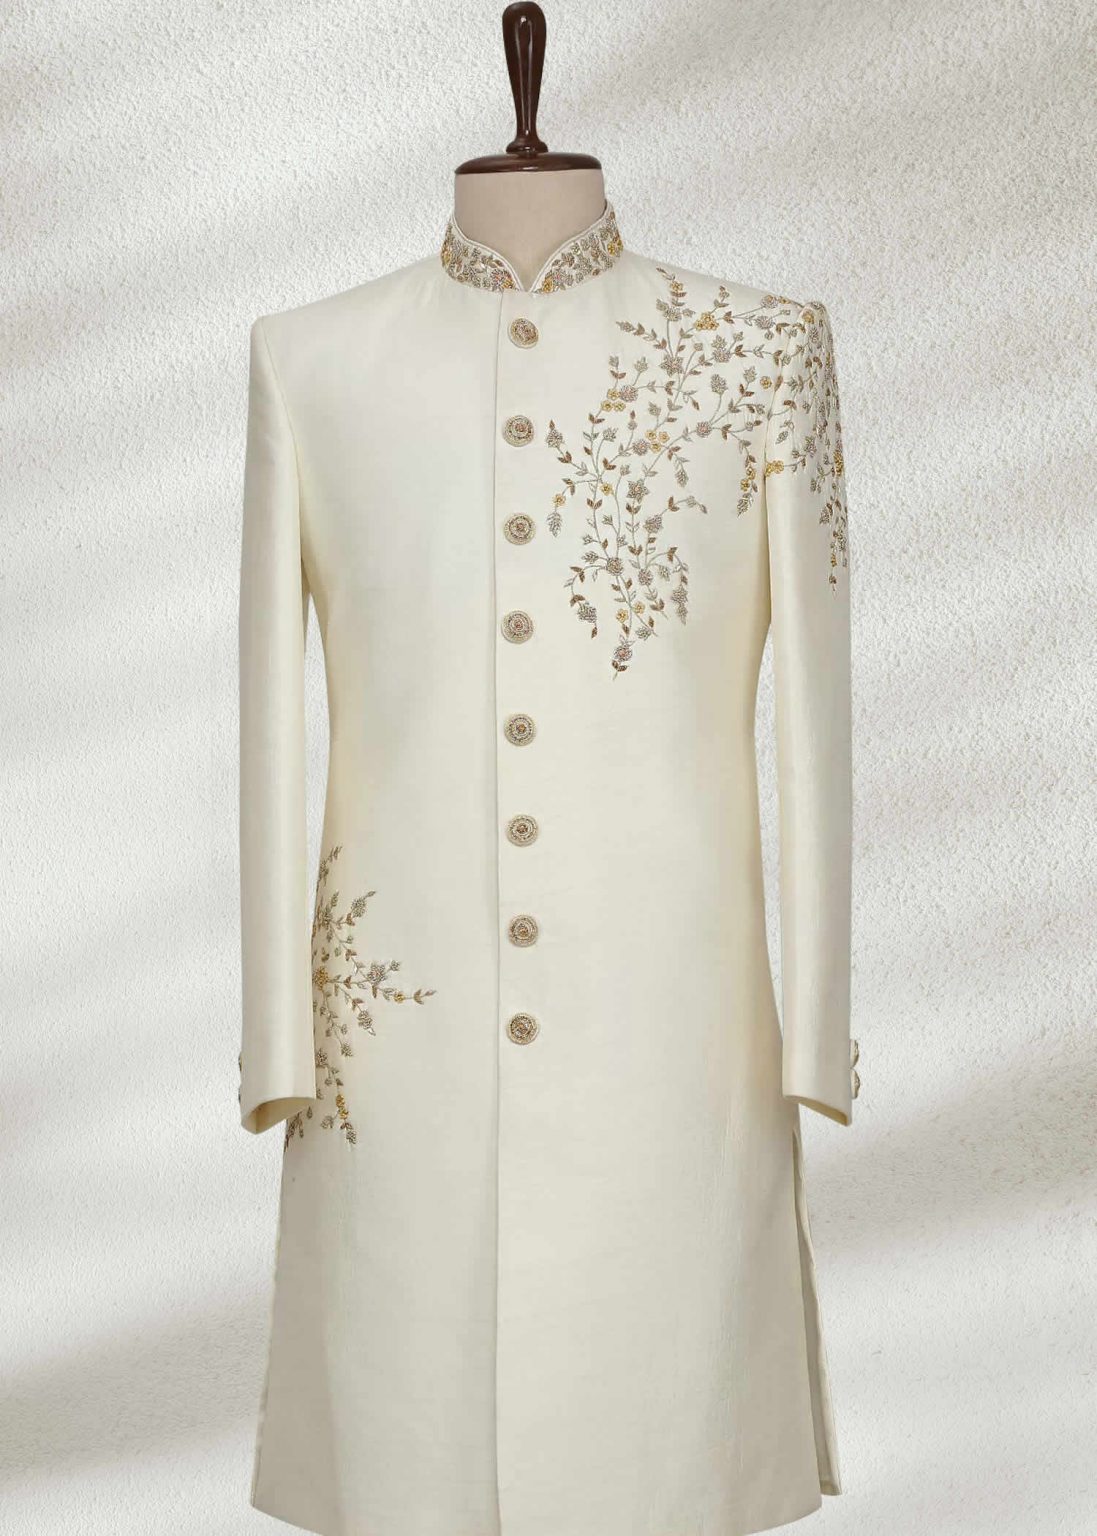 Pearl White Zardosi Embroidered Silk Wedding Sherwani